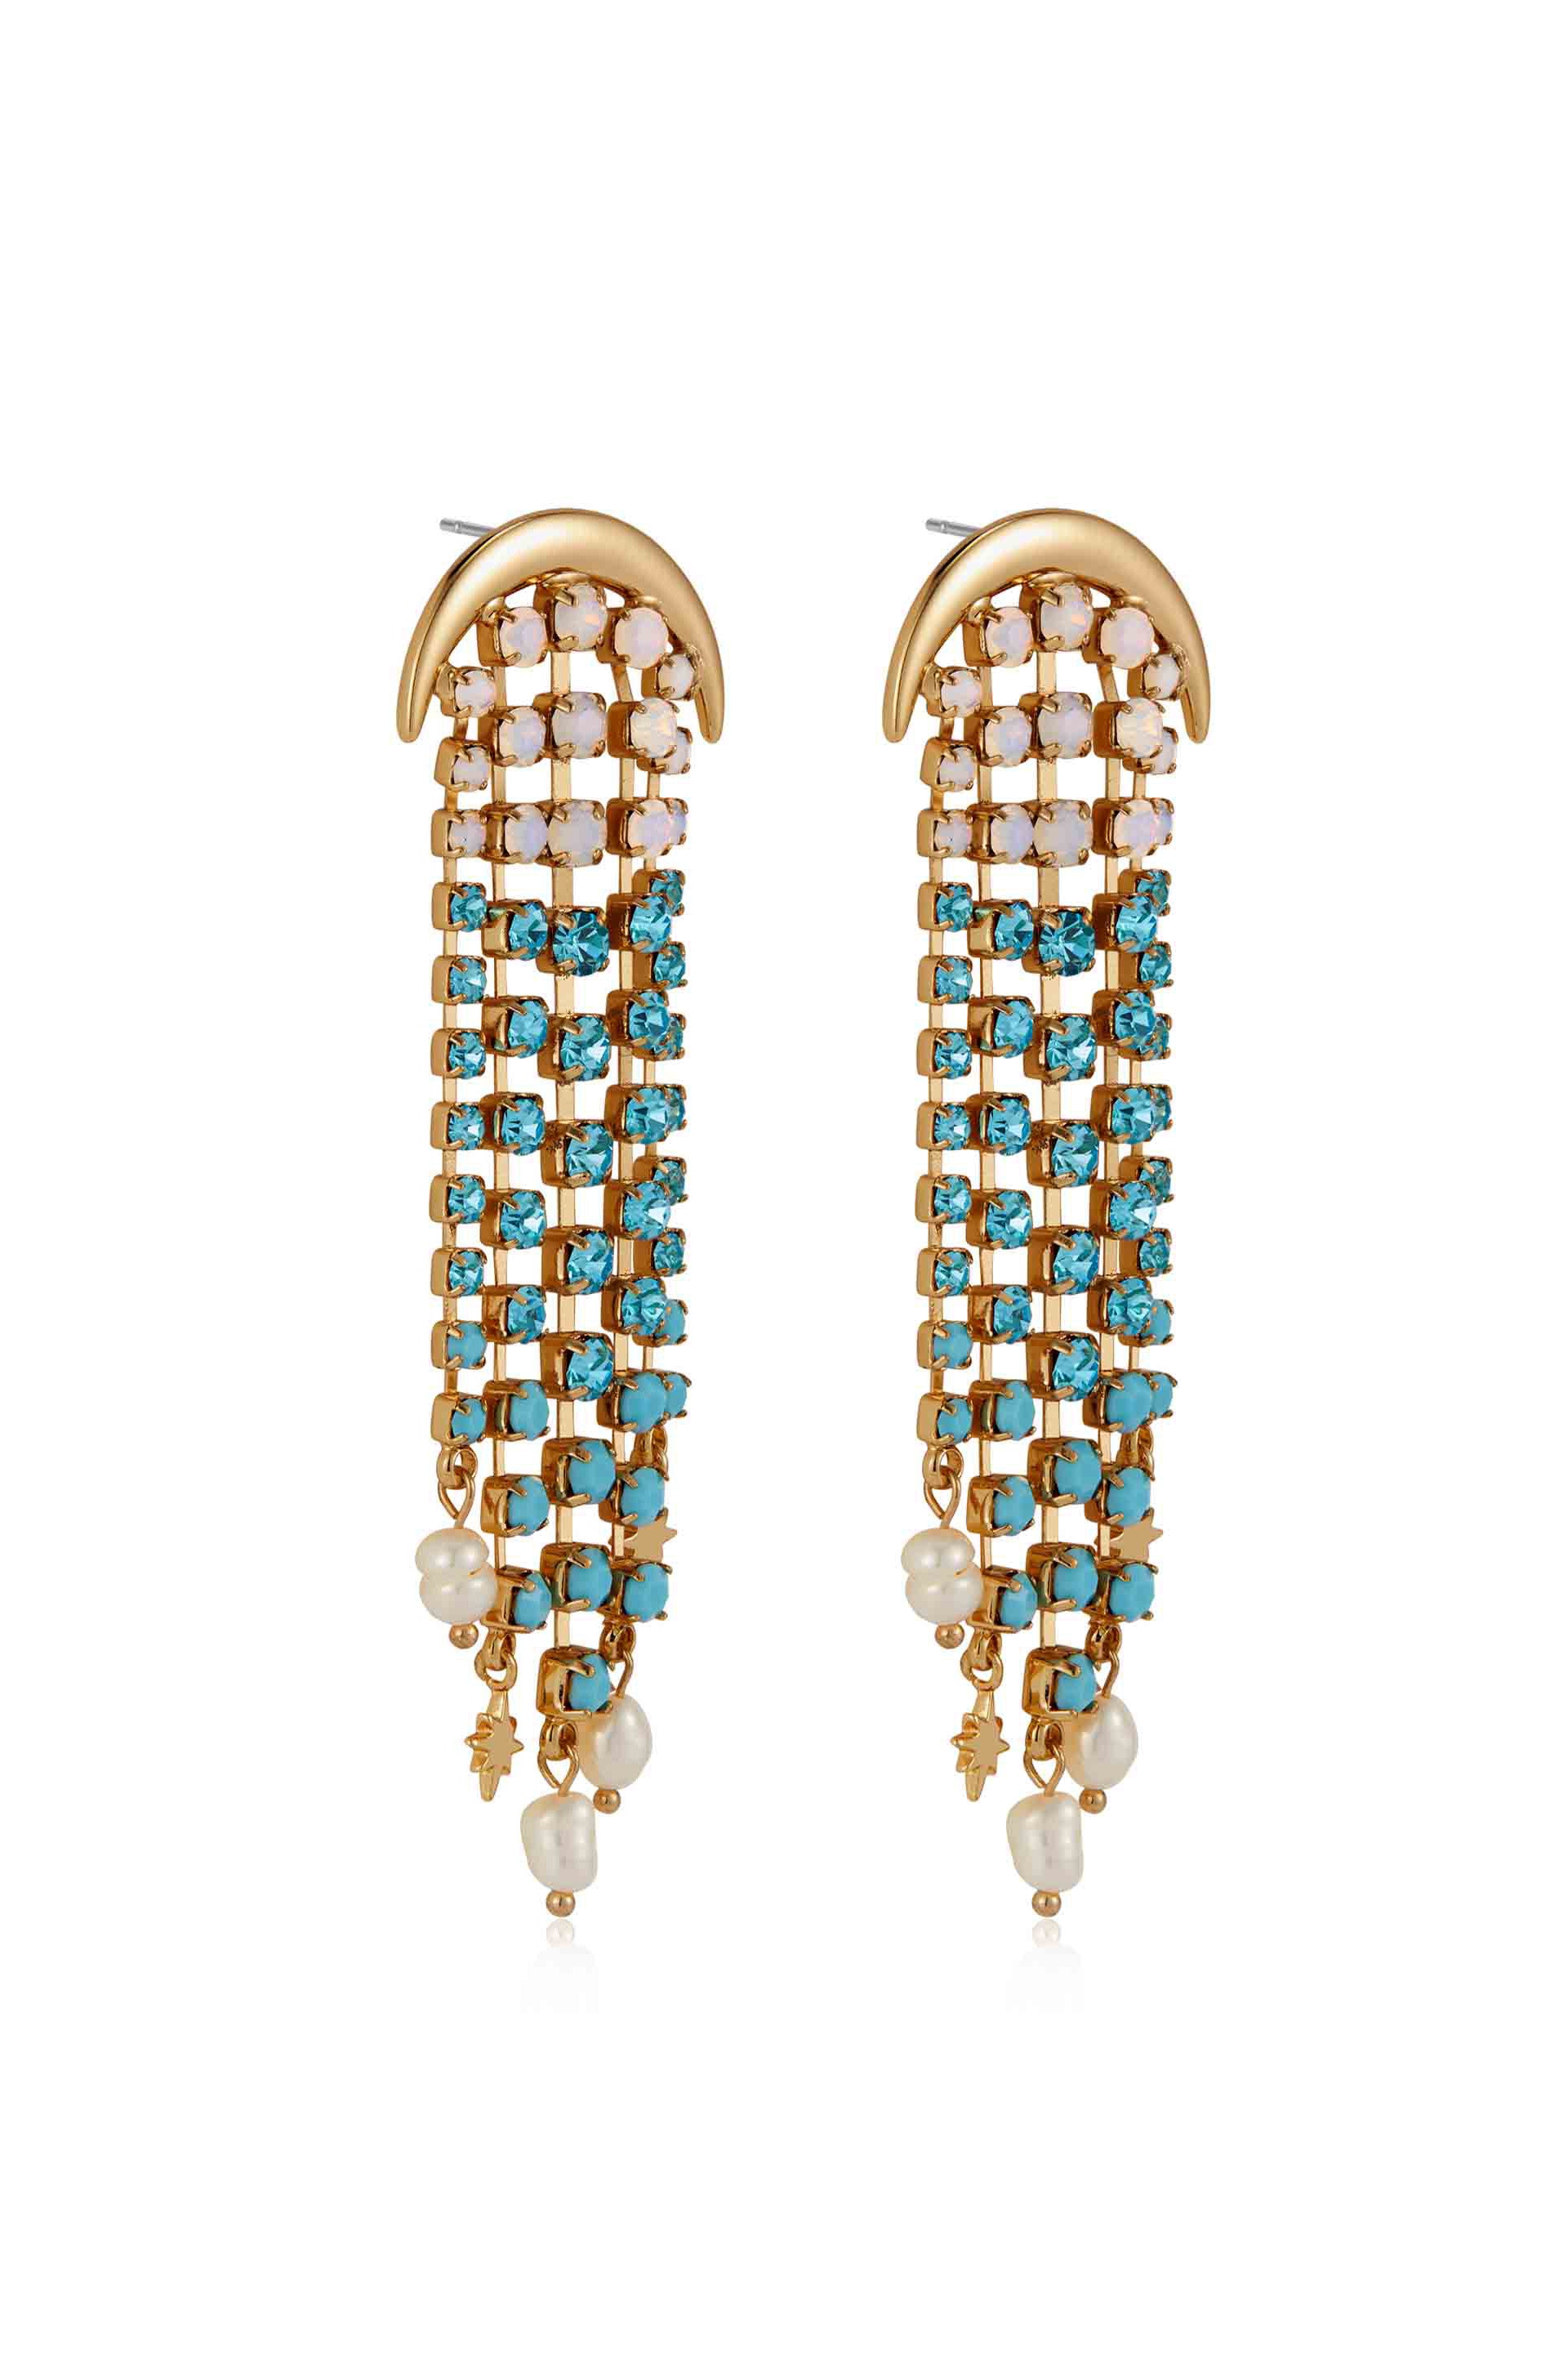 Aqua Galaxy Fringe Earrings - Premium Earrings from Ettika - Just $65! Shop now at Tooksie